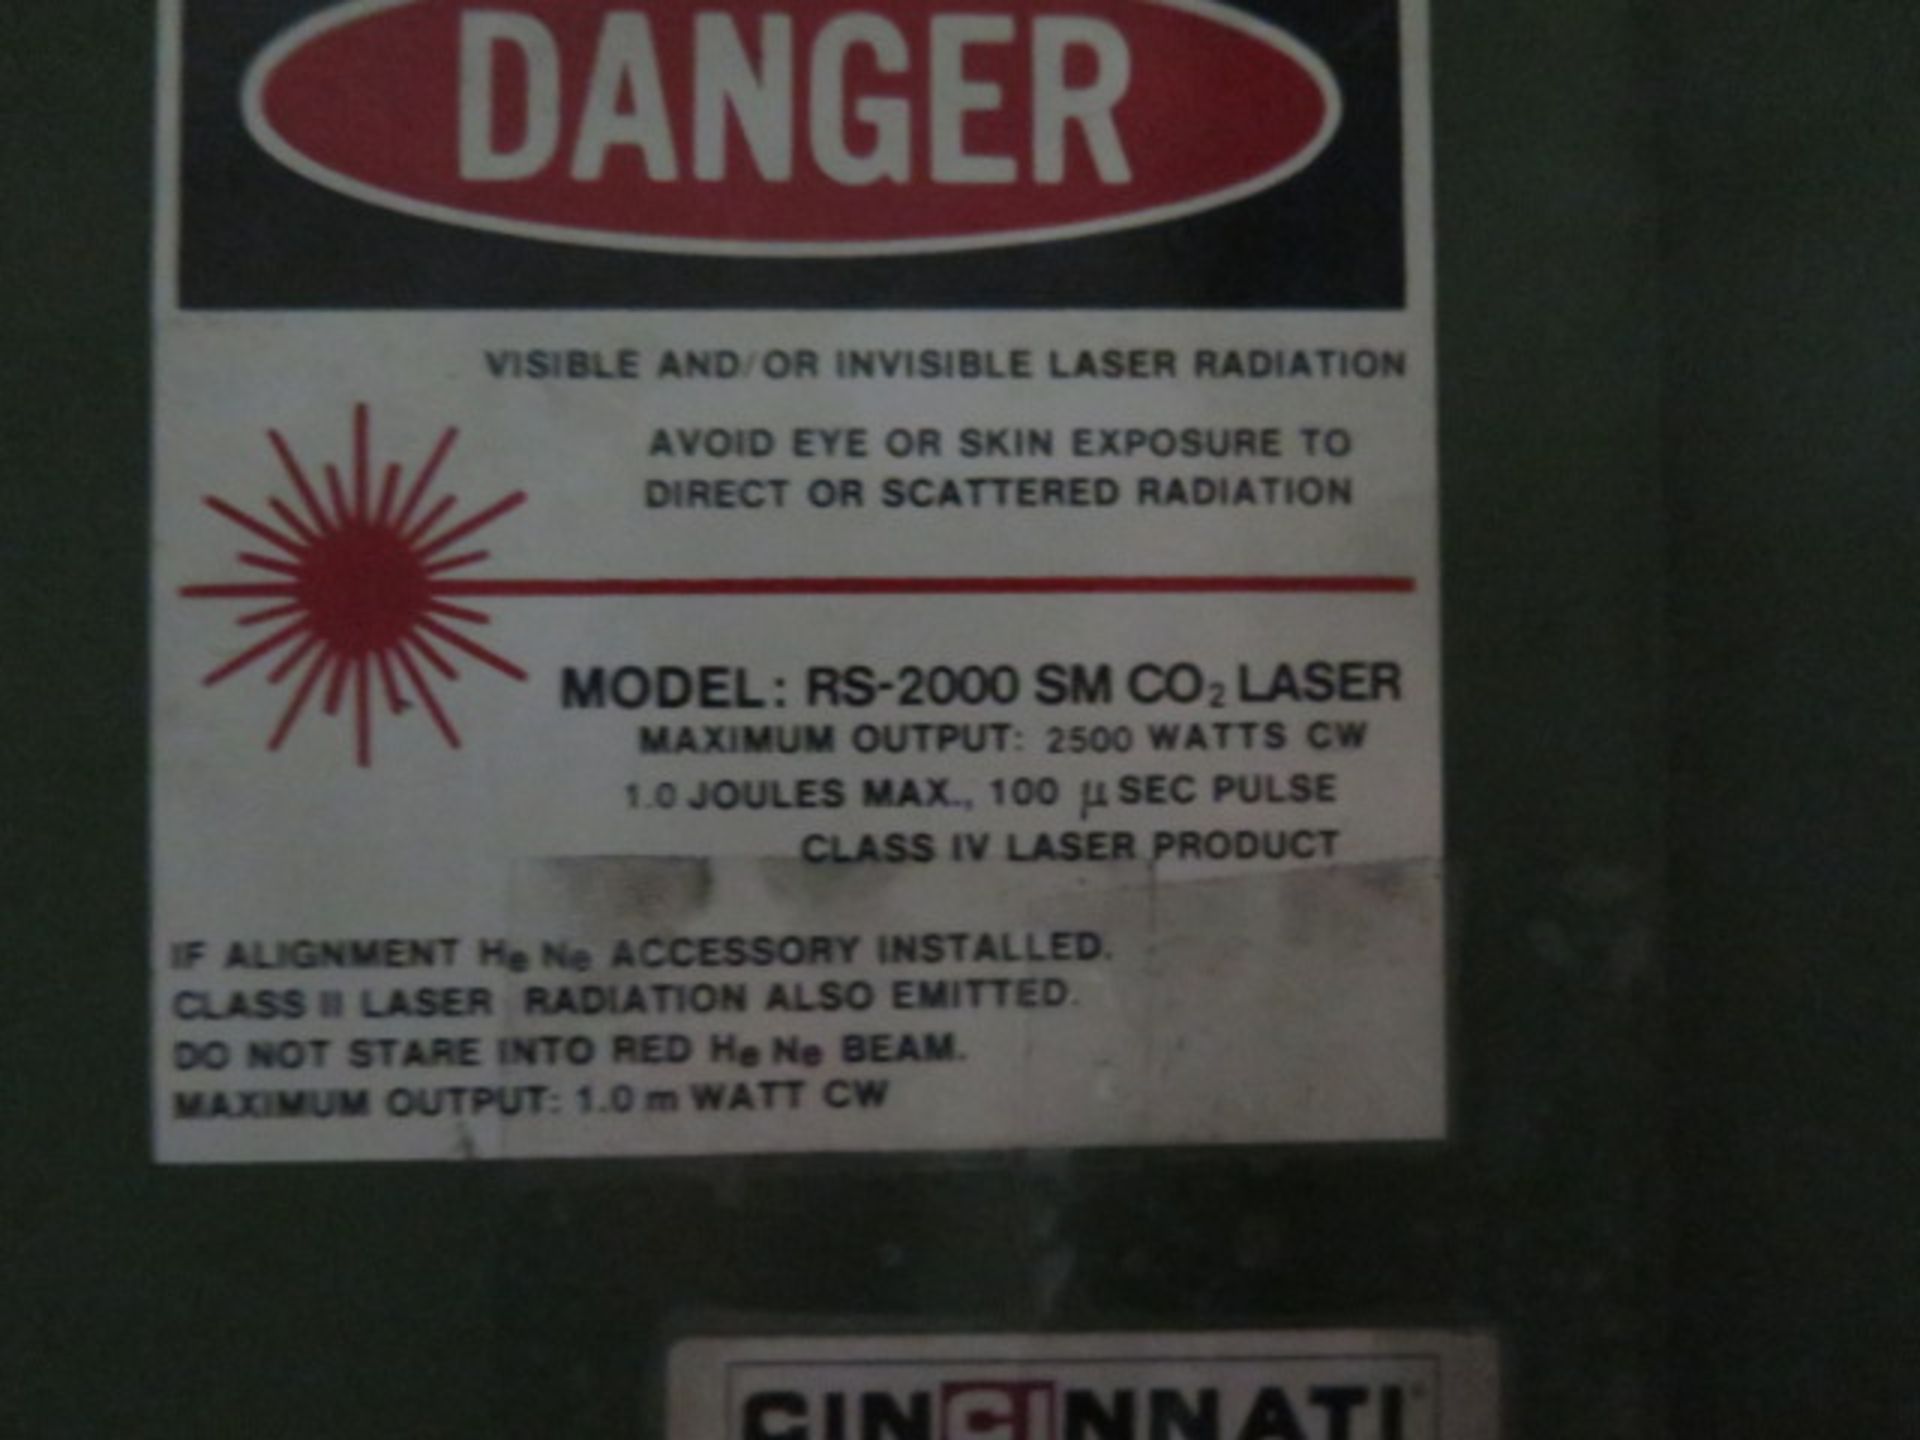 1995 Cincinnati mdl. CL-7A “Laser Center” 2-Shuttle CNC Laser Contour Cutting Machine s/n 48953 w/ - Image 17 of 23